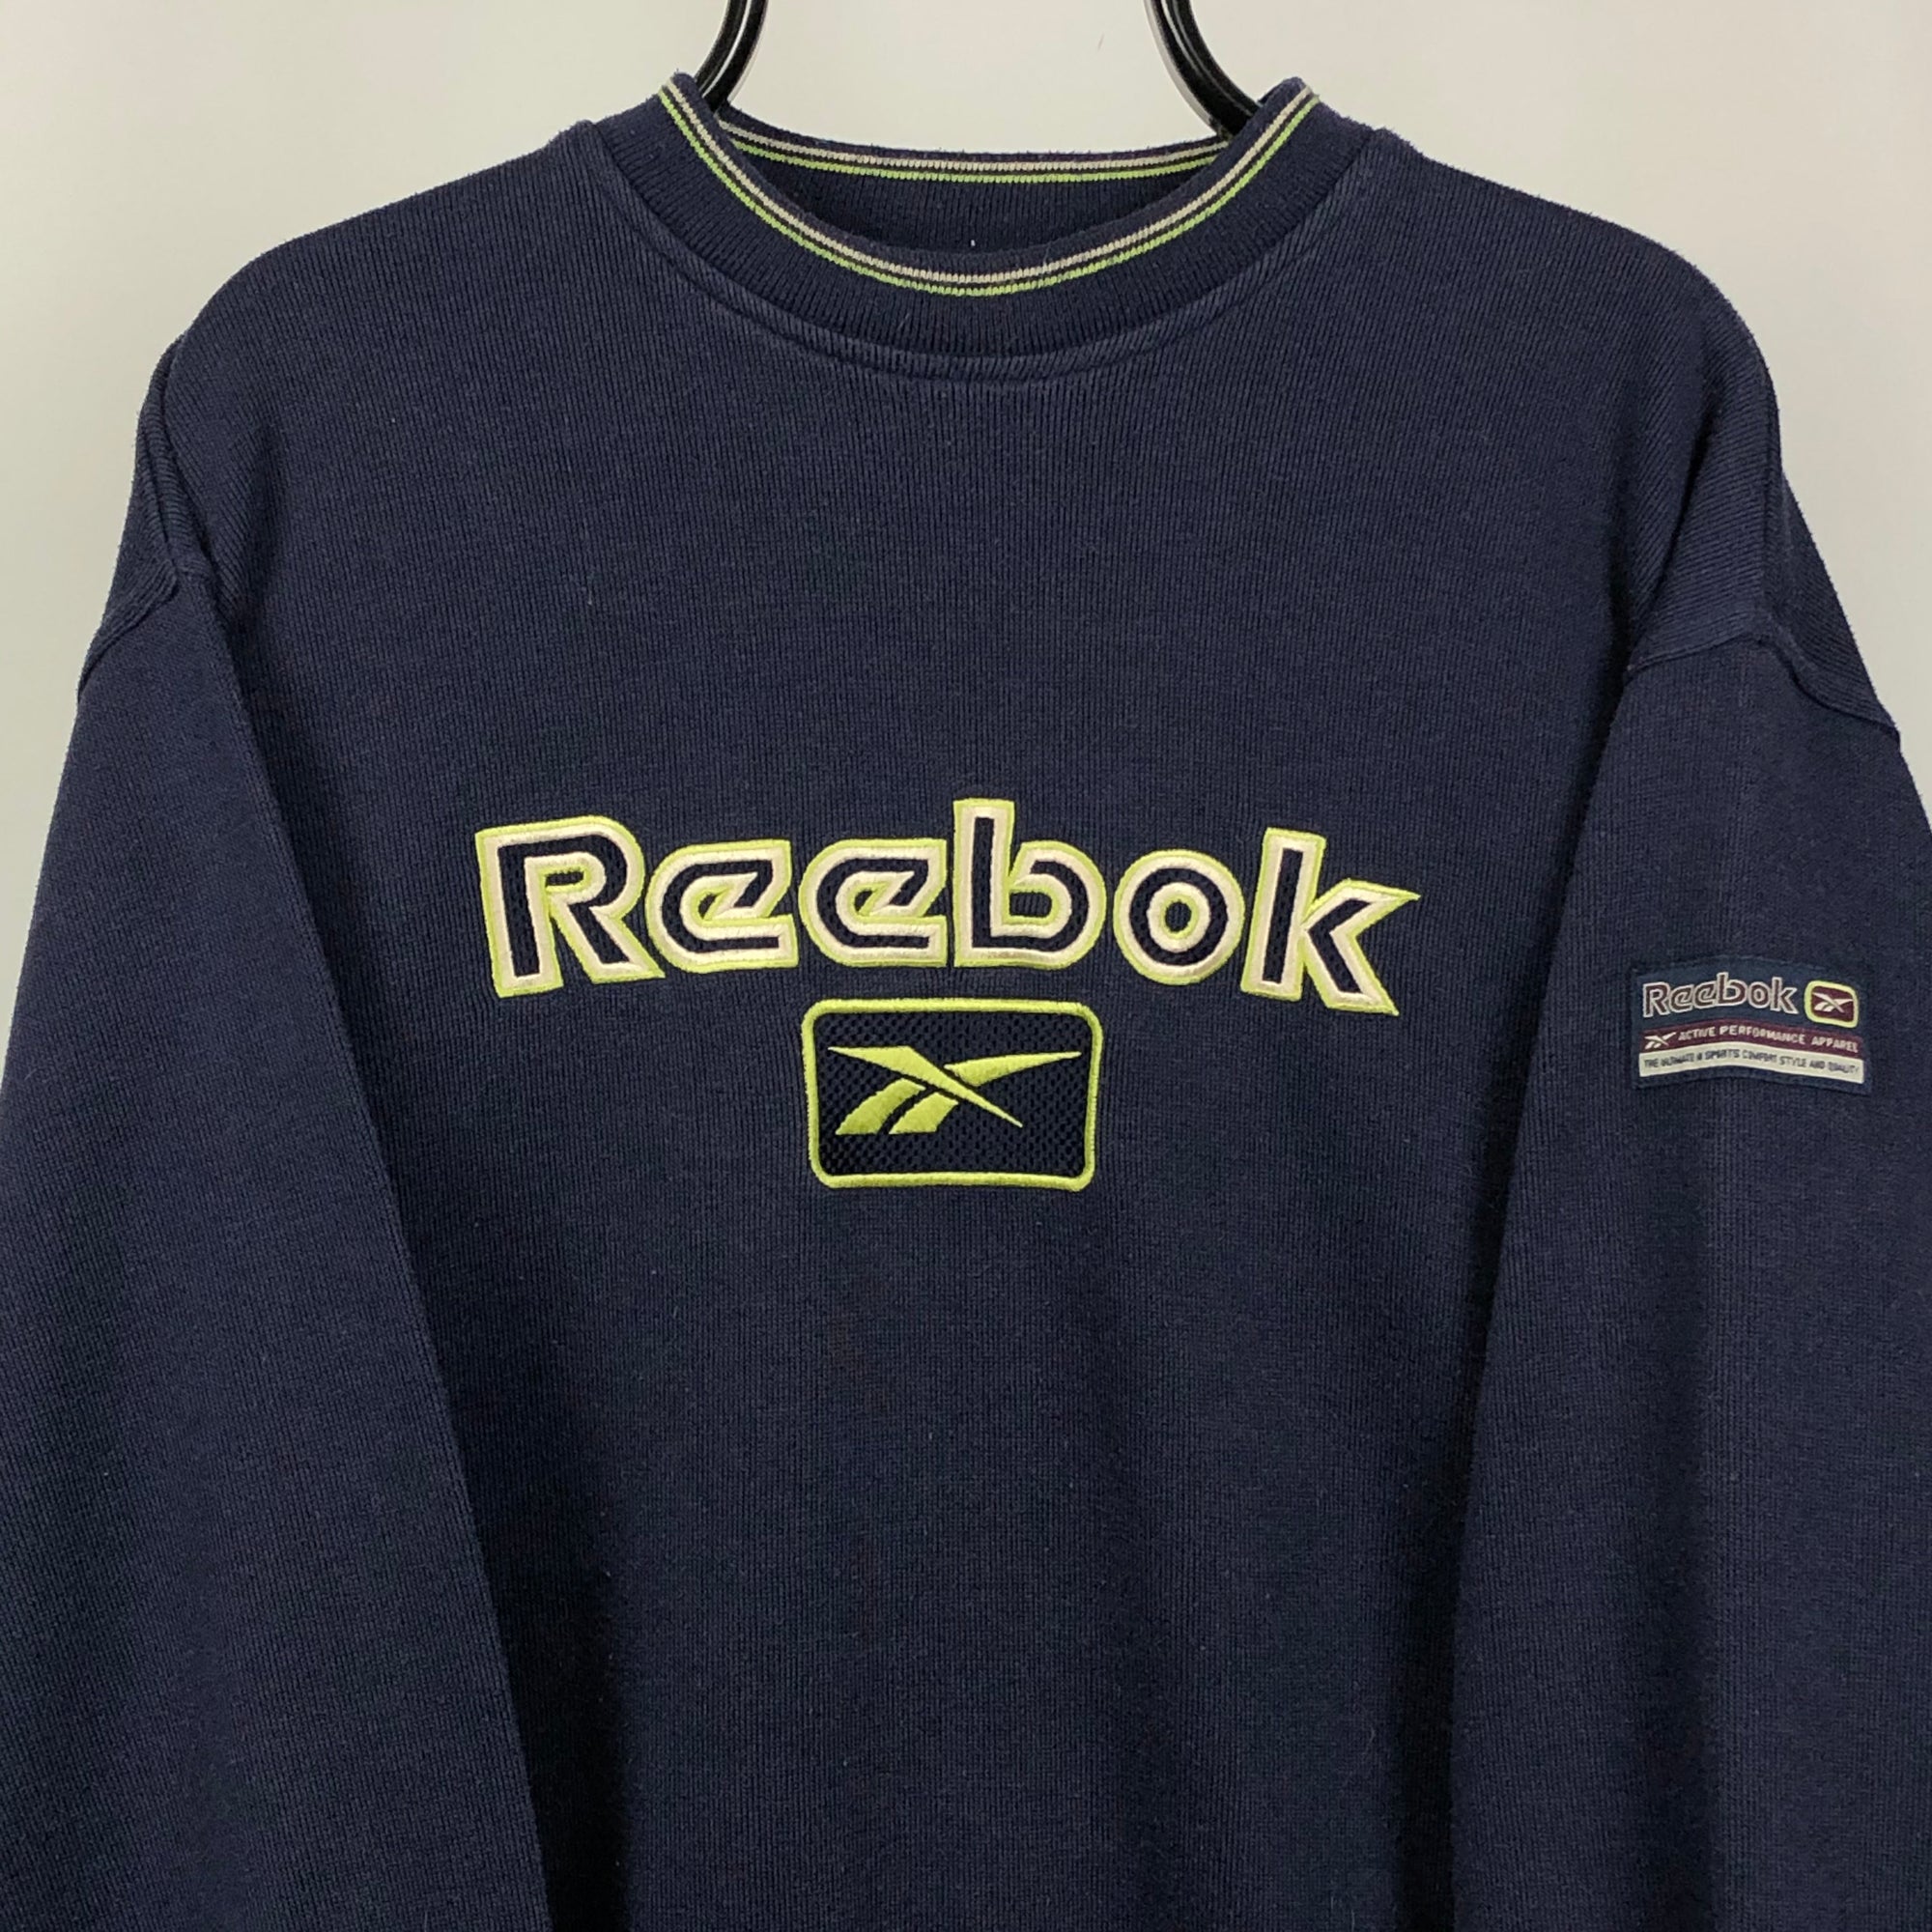 Vintage Reebok Spellout Sweatshirt - Men's Medium/Women's Large